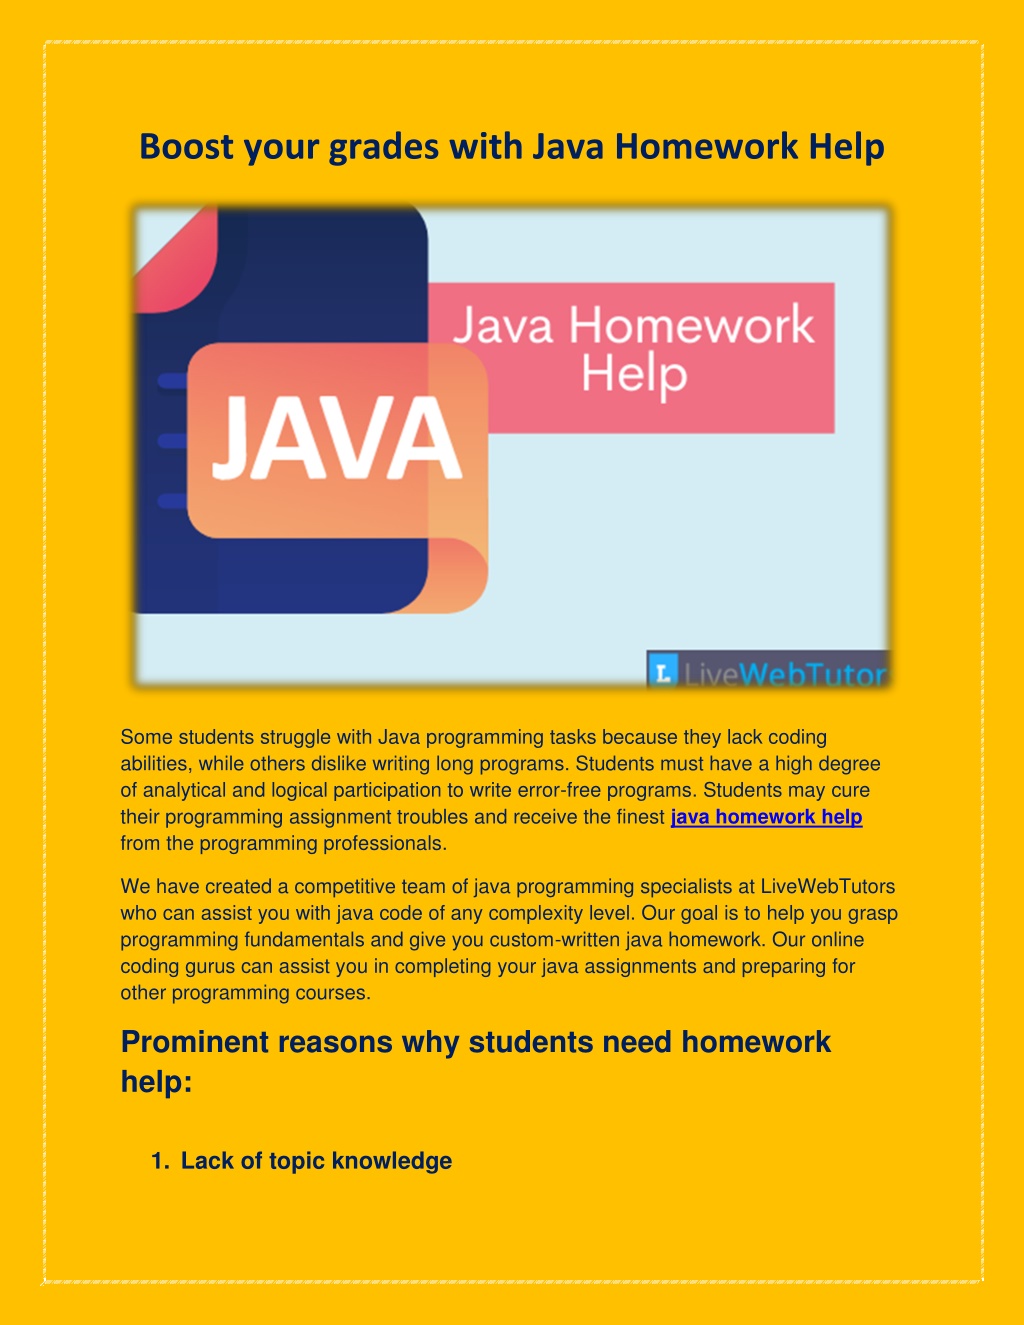 help with java homework